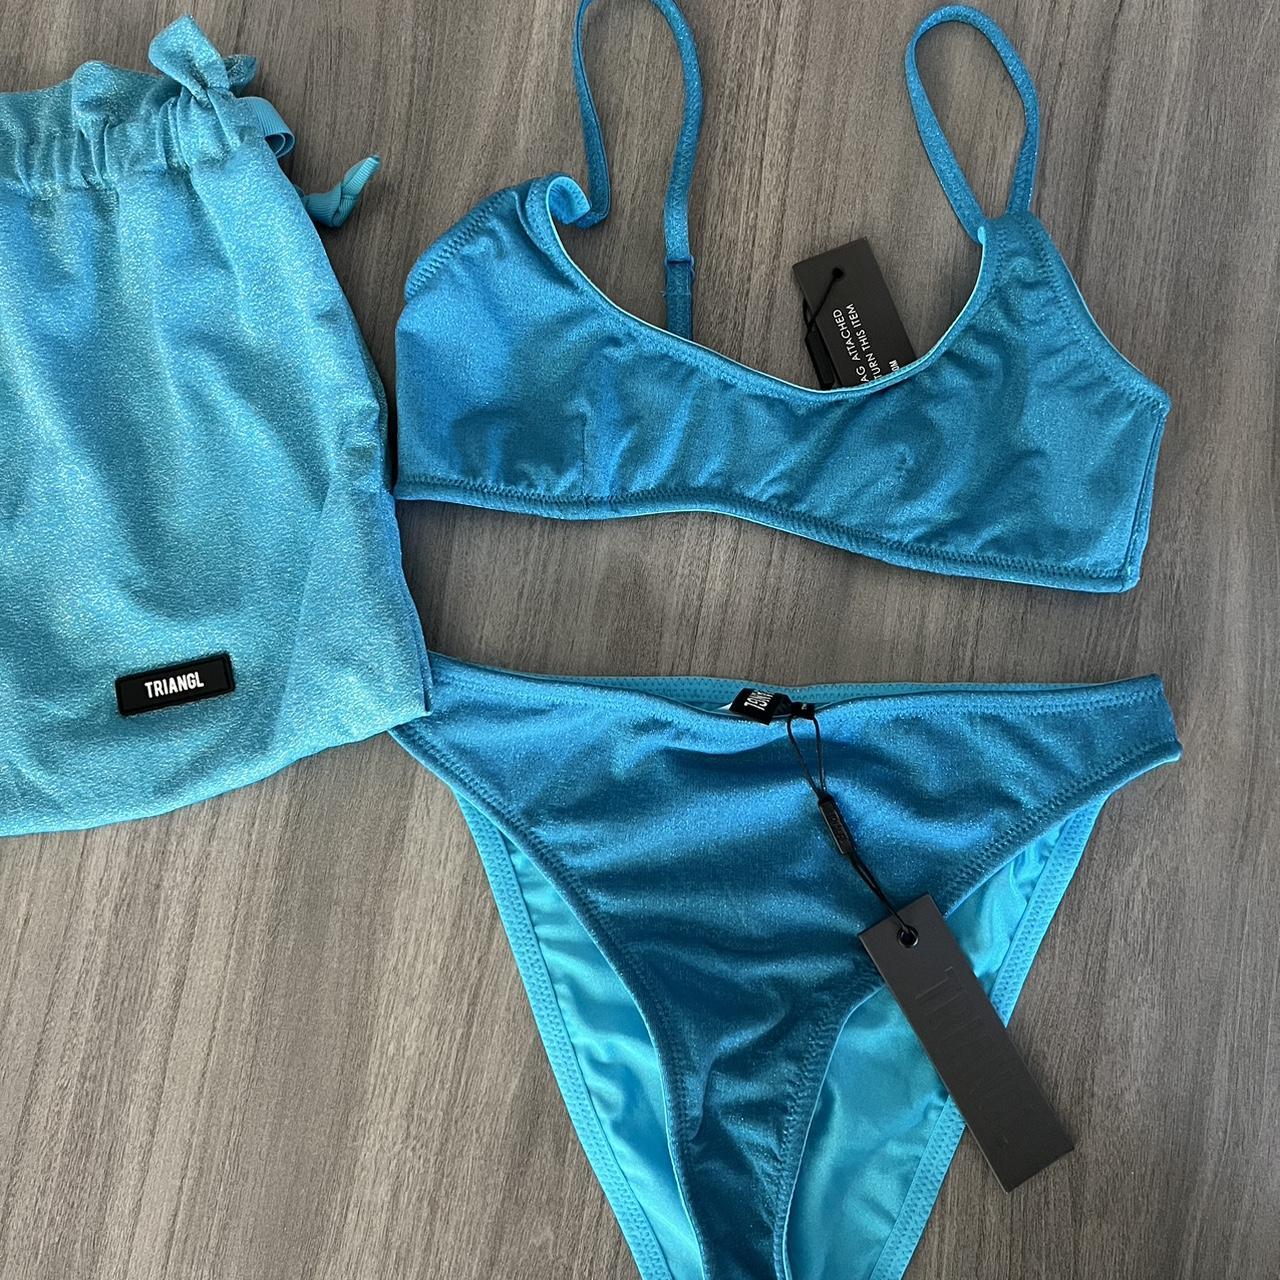 Triangl blue sparkle bikini set , New with bag, With